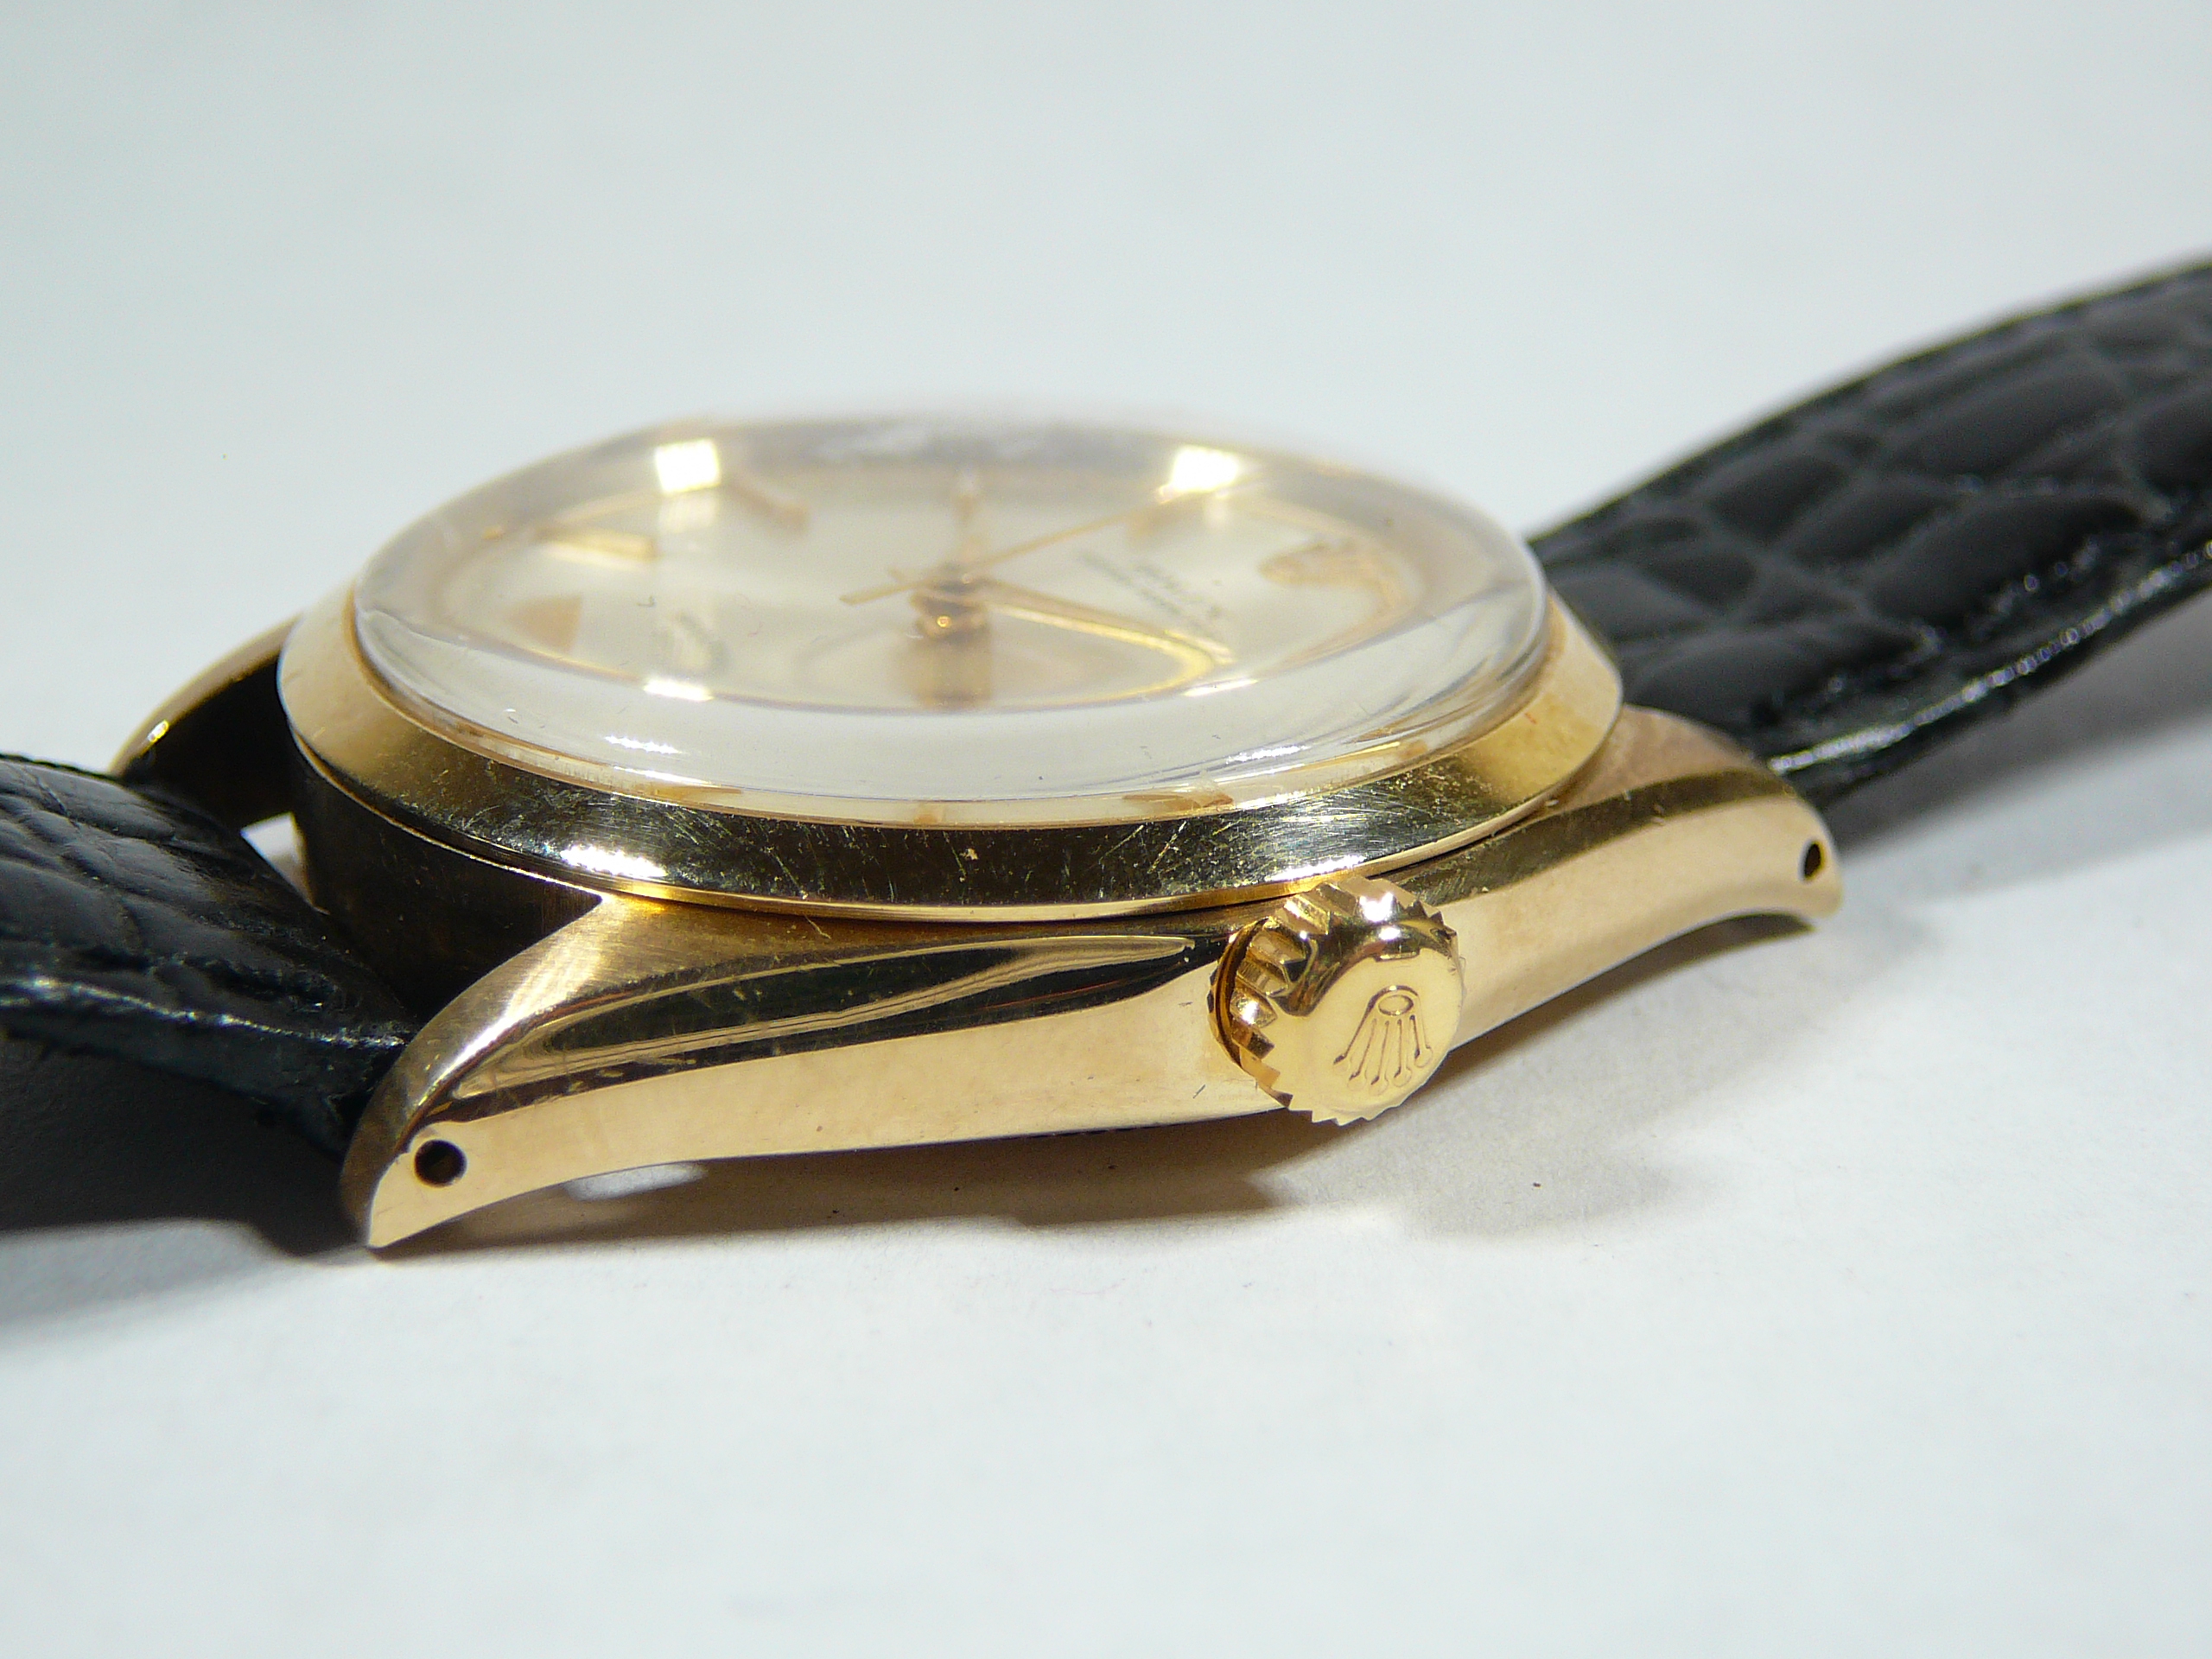 Gents Rolex Gold Wrist Watch - Image 4 of 4